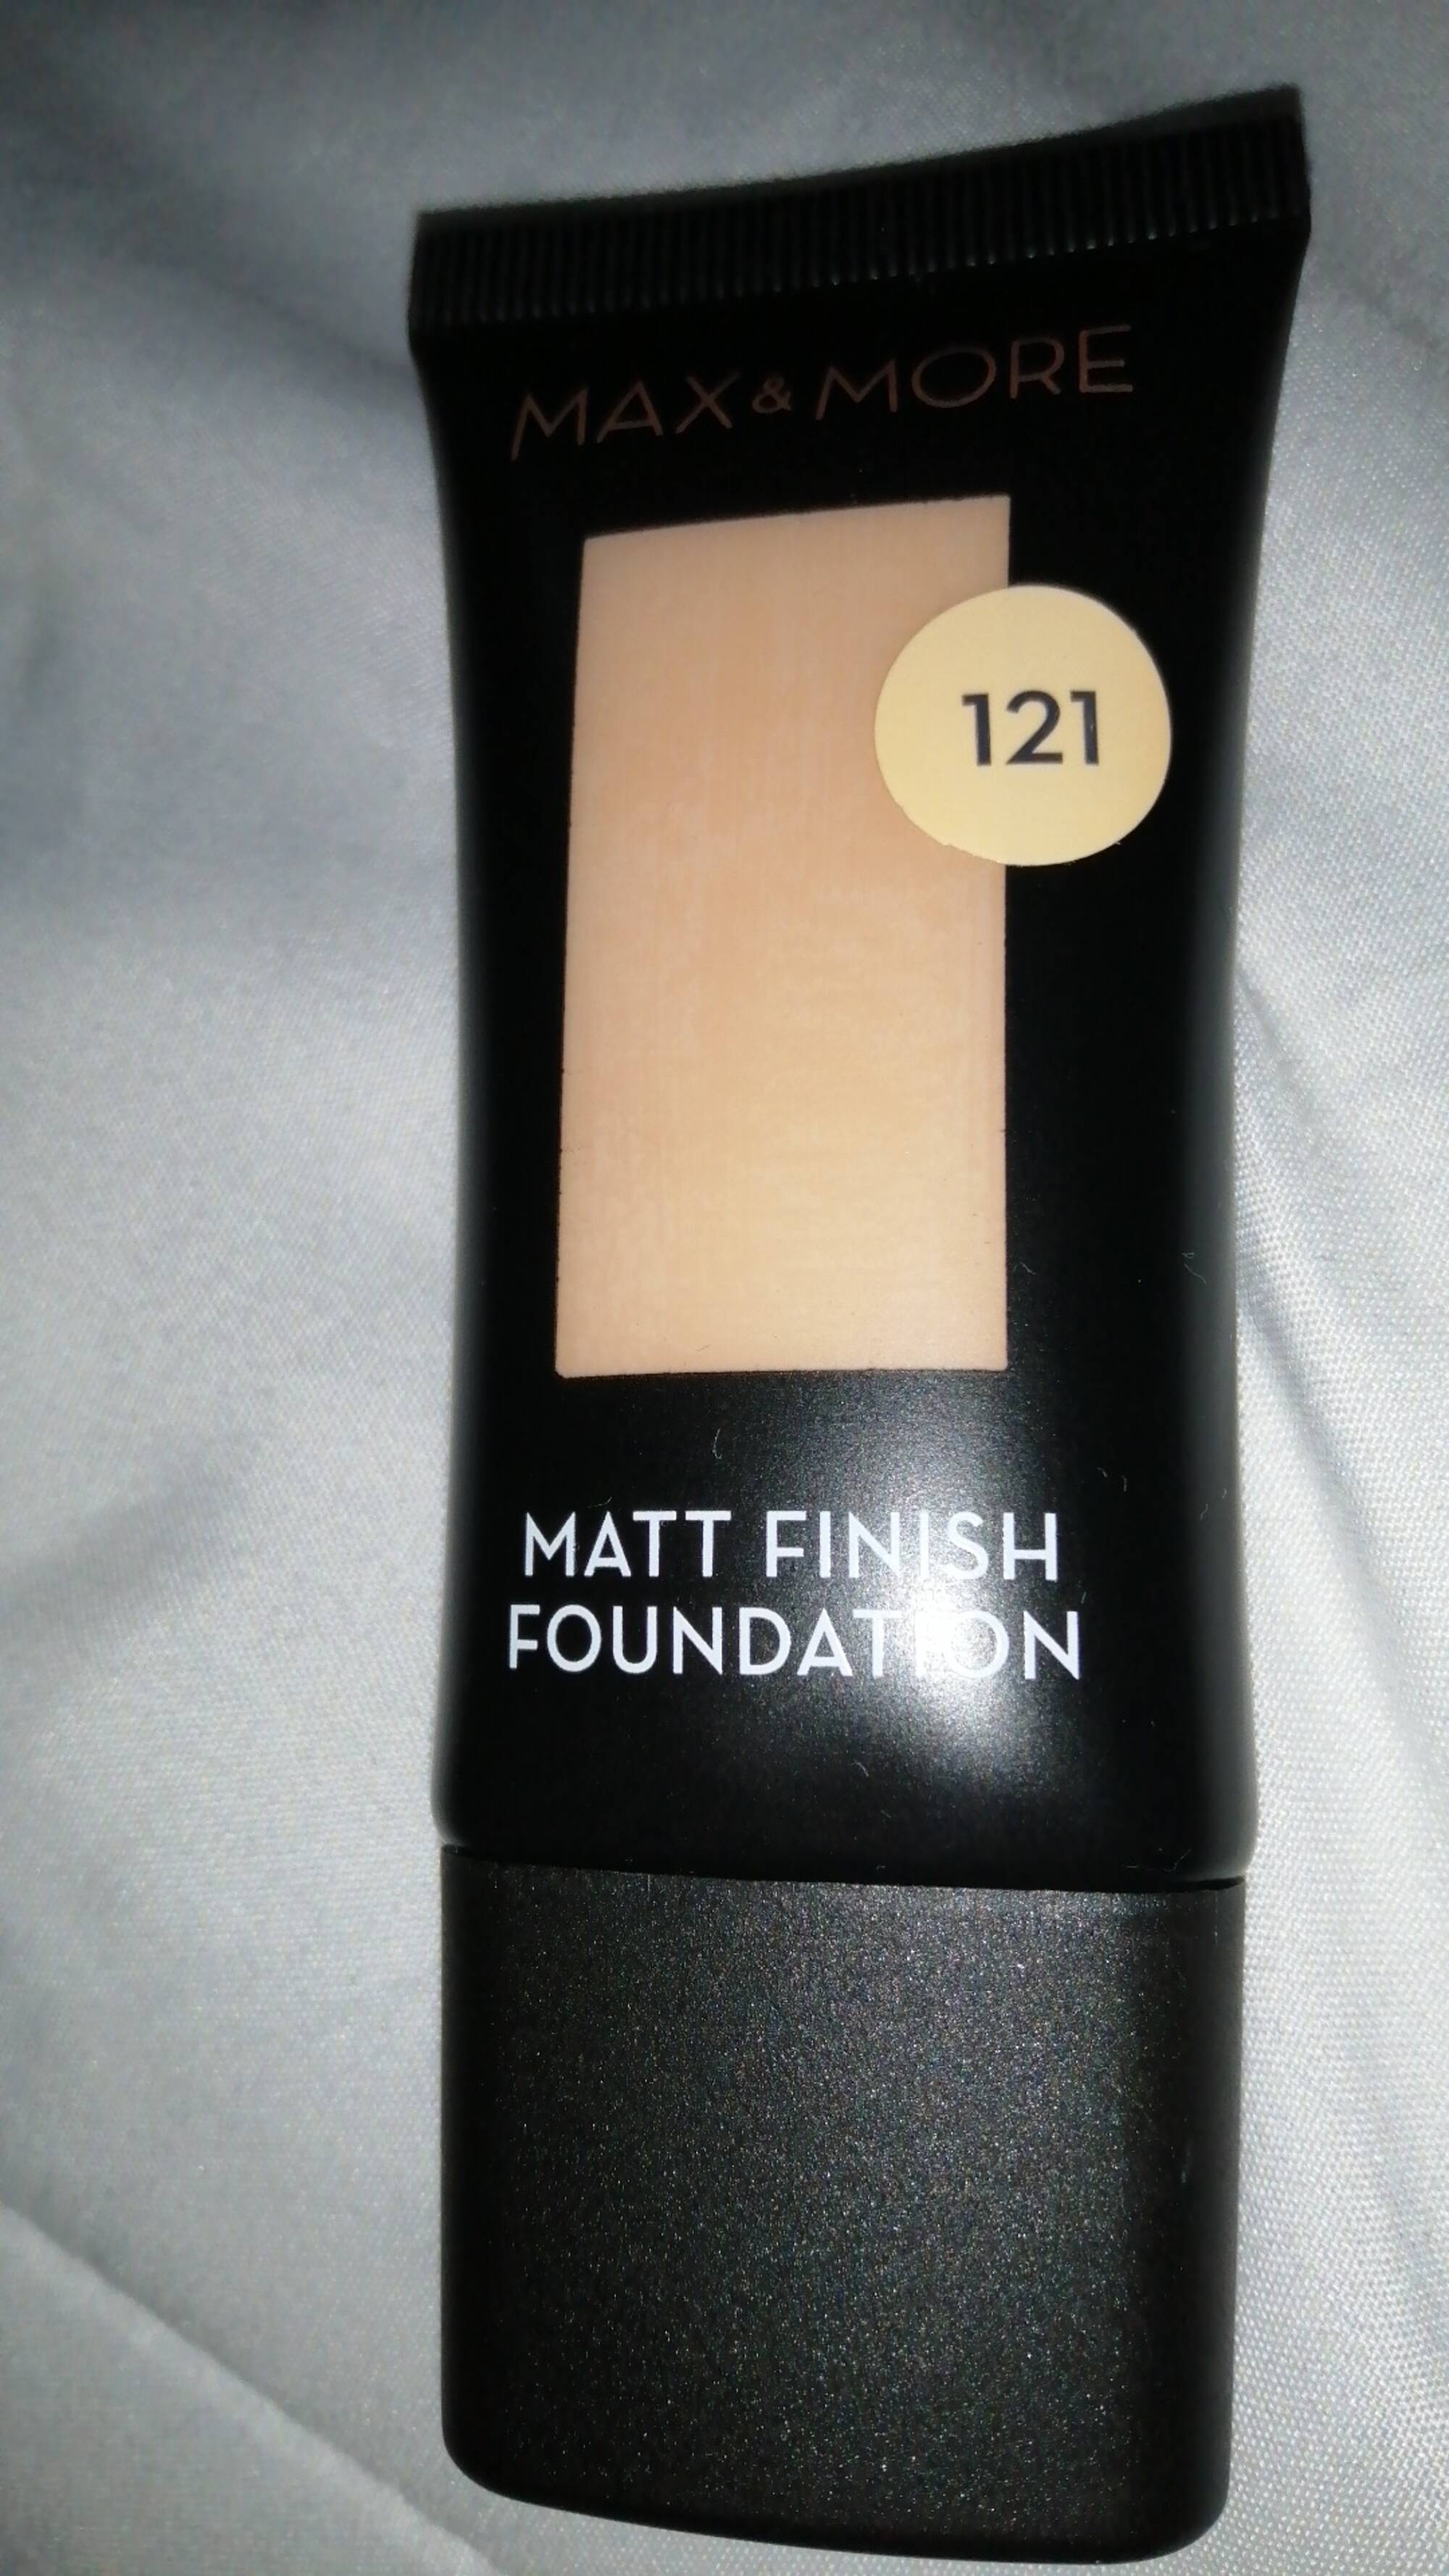 MAX & MORE - Matt finish foundation 121